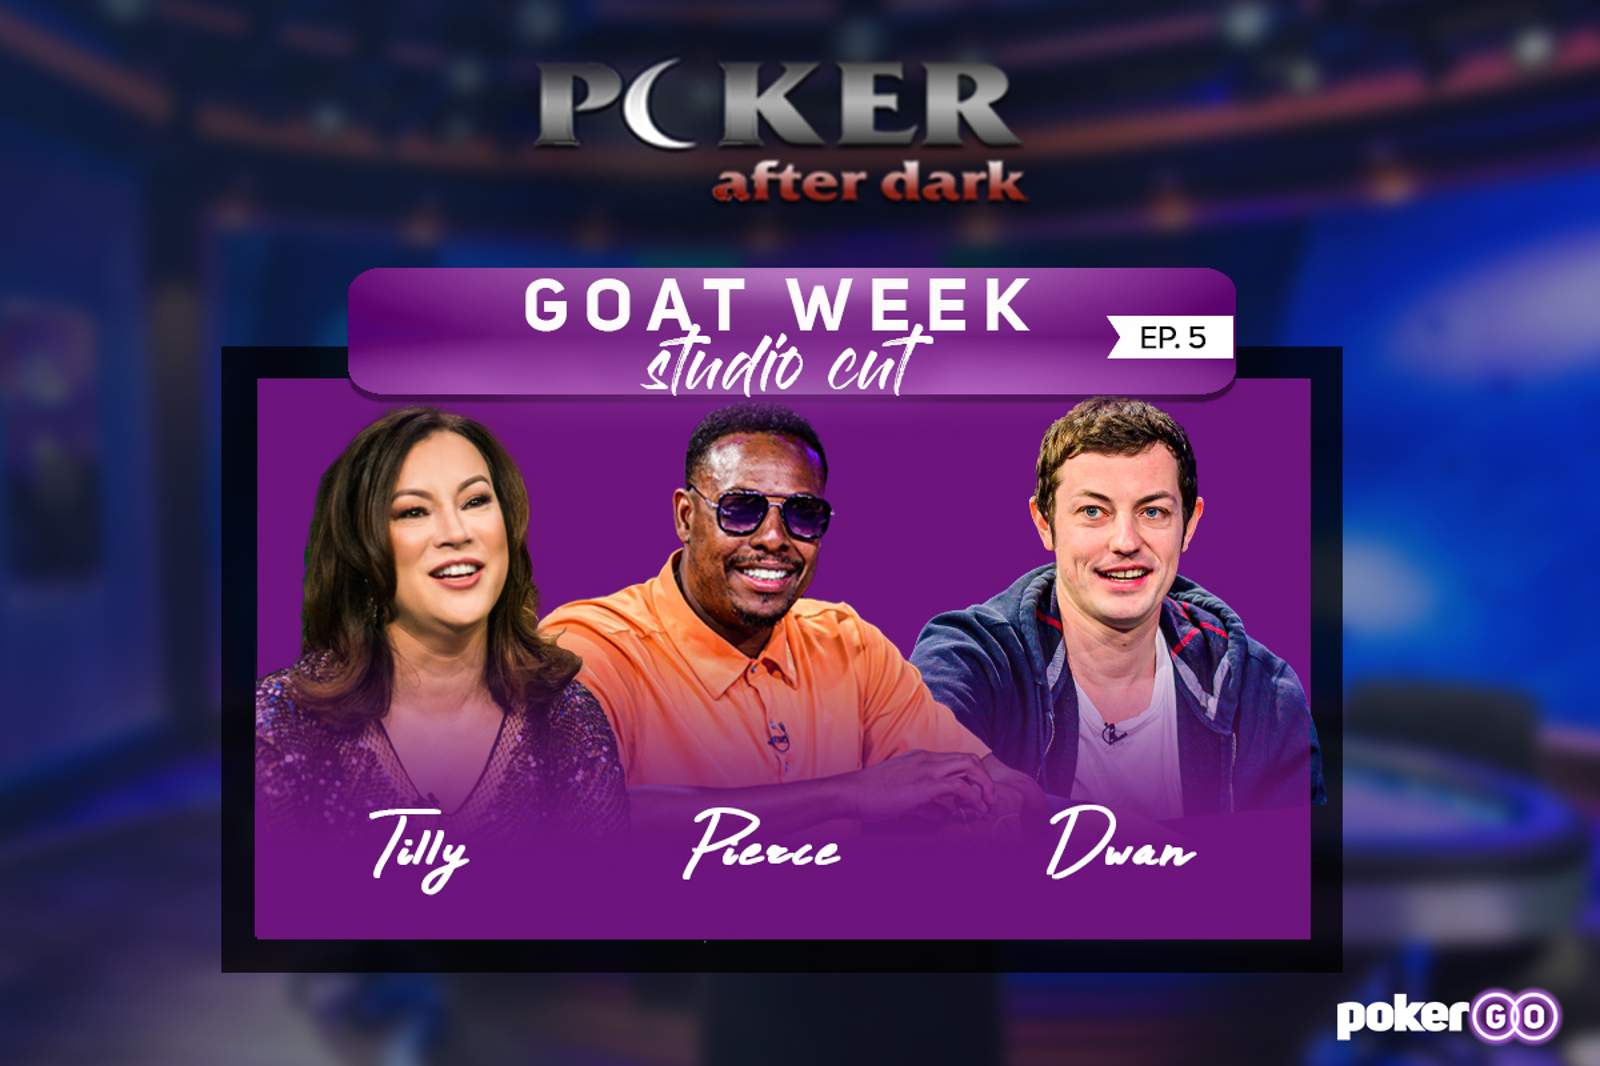 Poker After Dark Studio Cut Episode 5 on Tonight at 9 p.m. ET